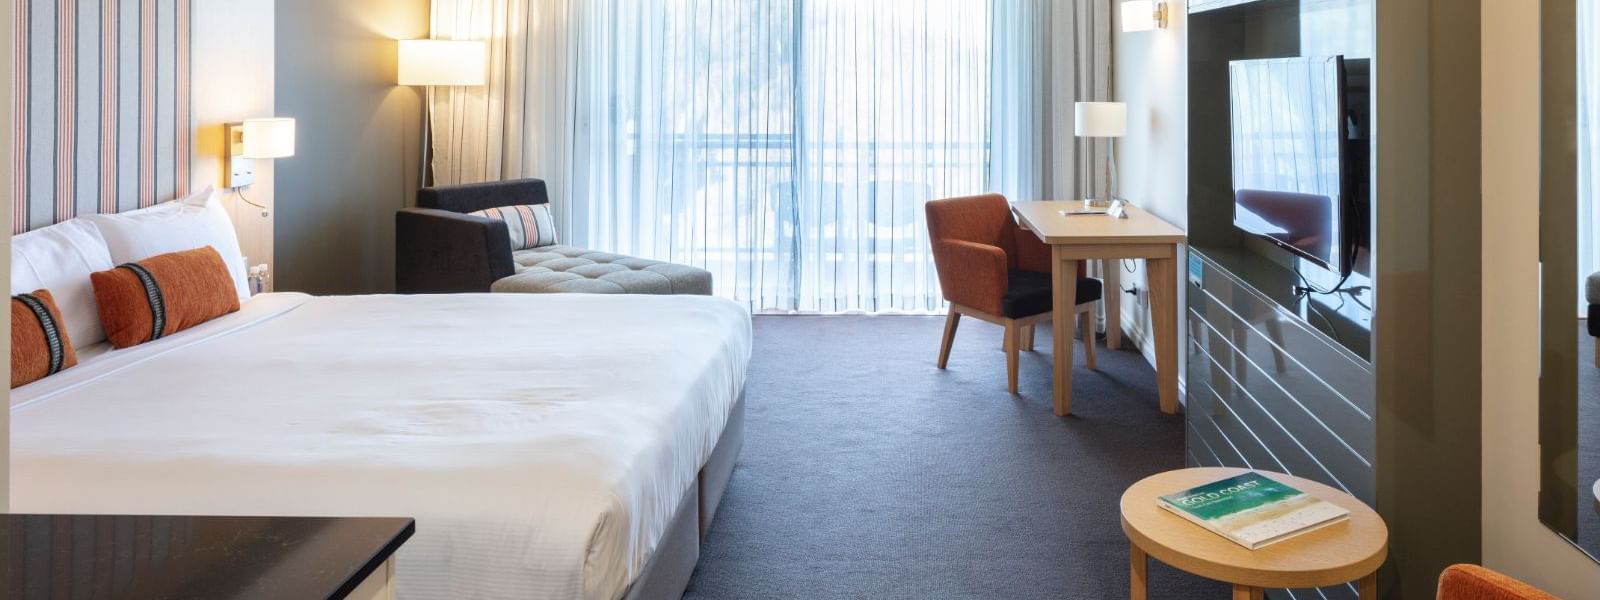 Superior room king bed at Mercure Gold Coast Resort